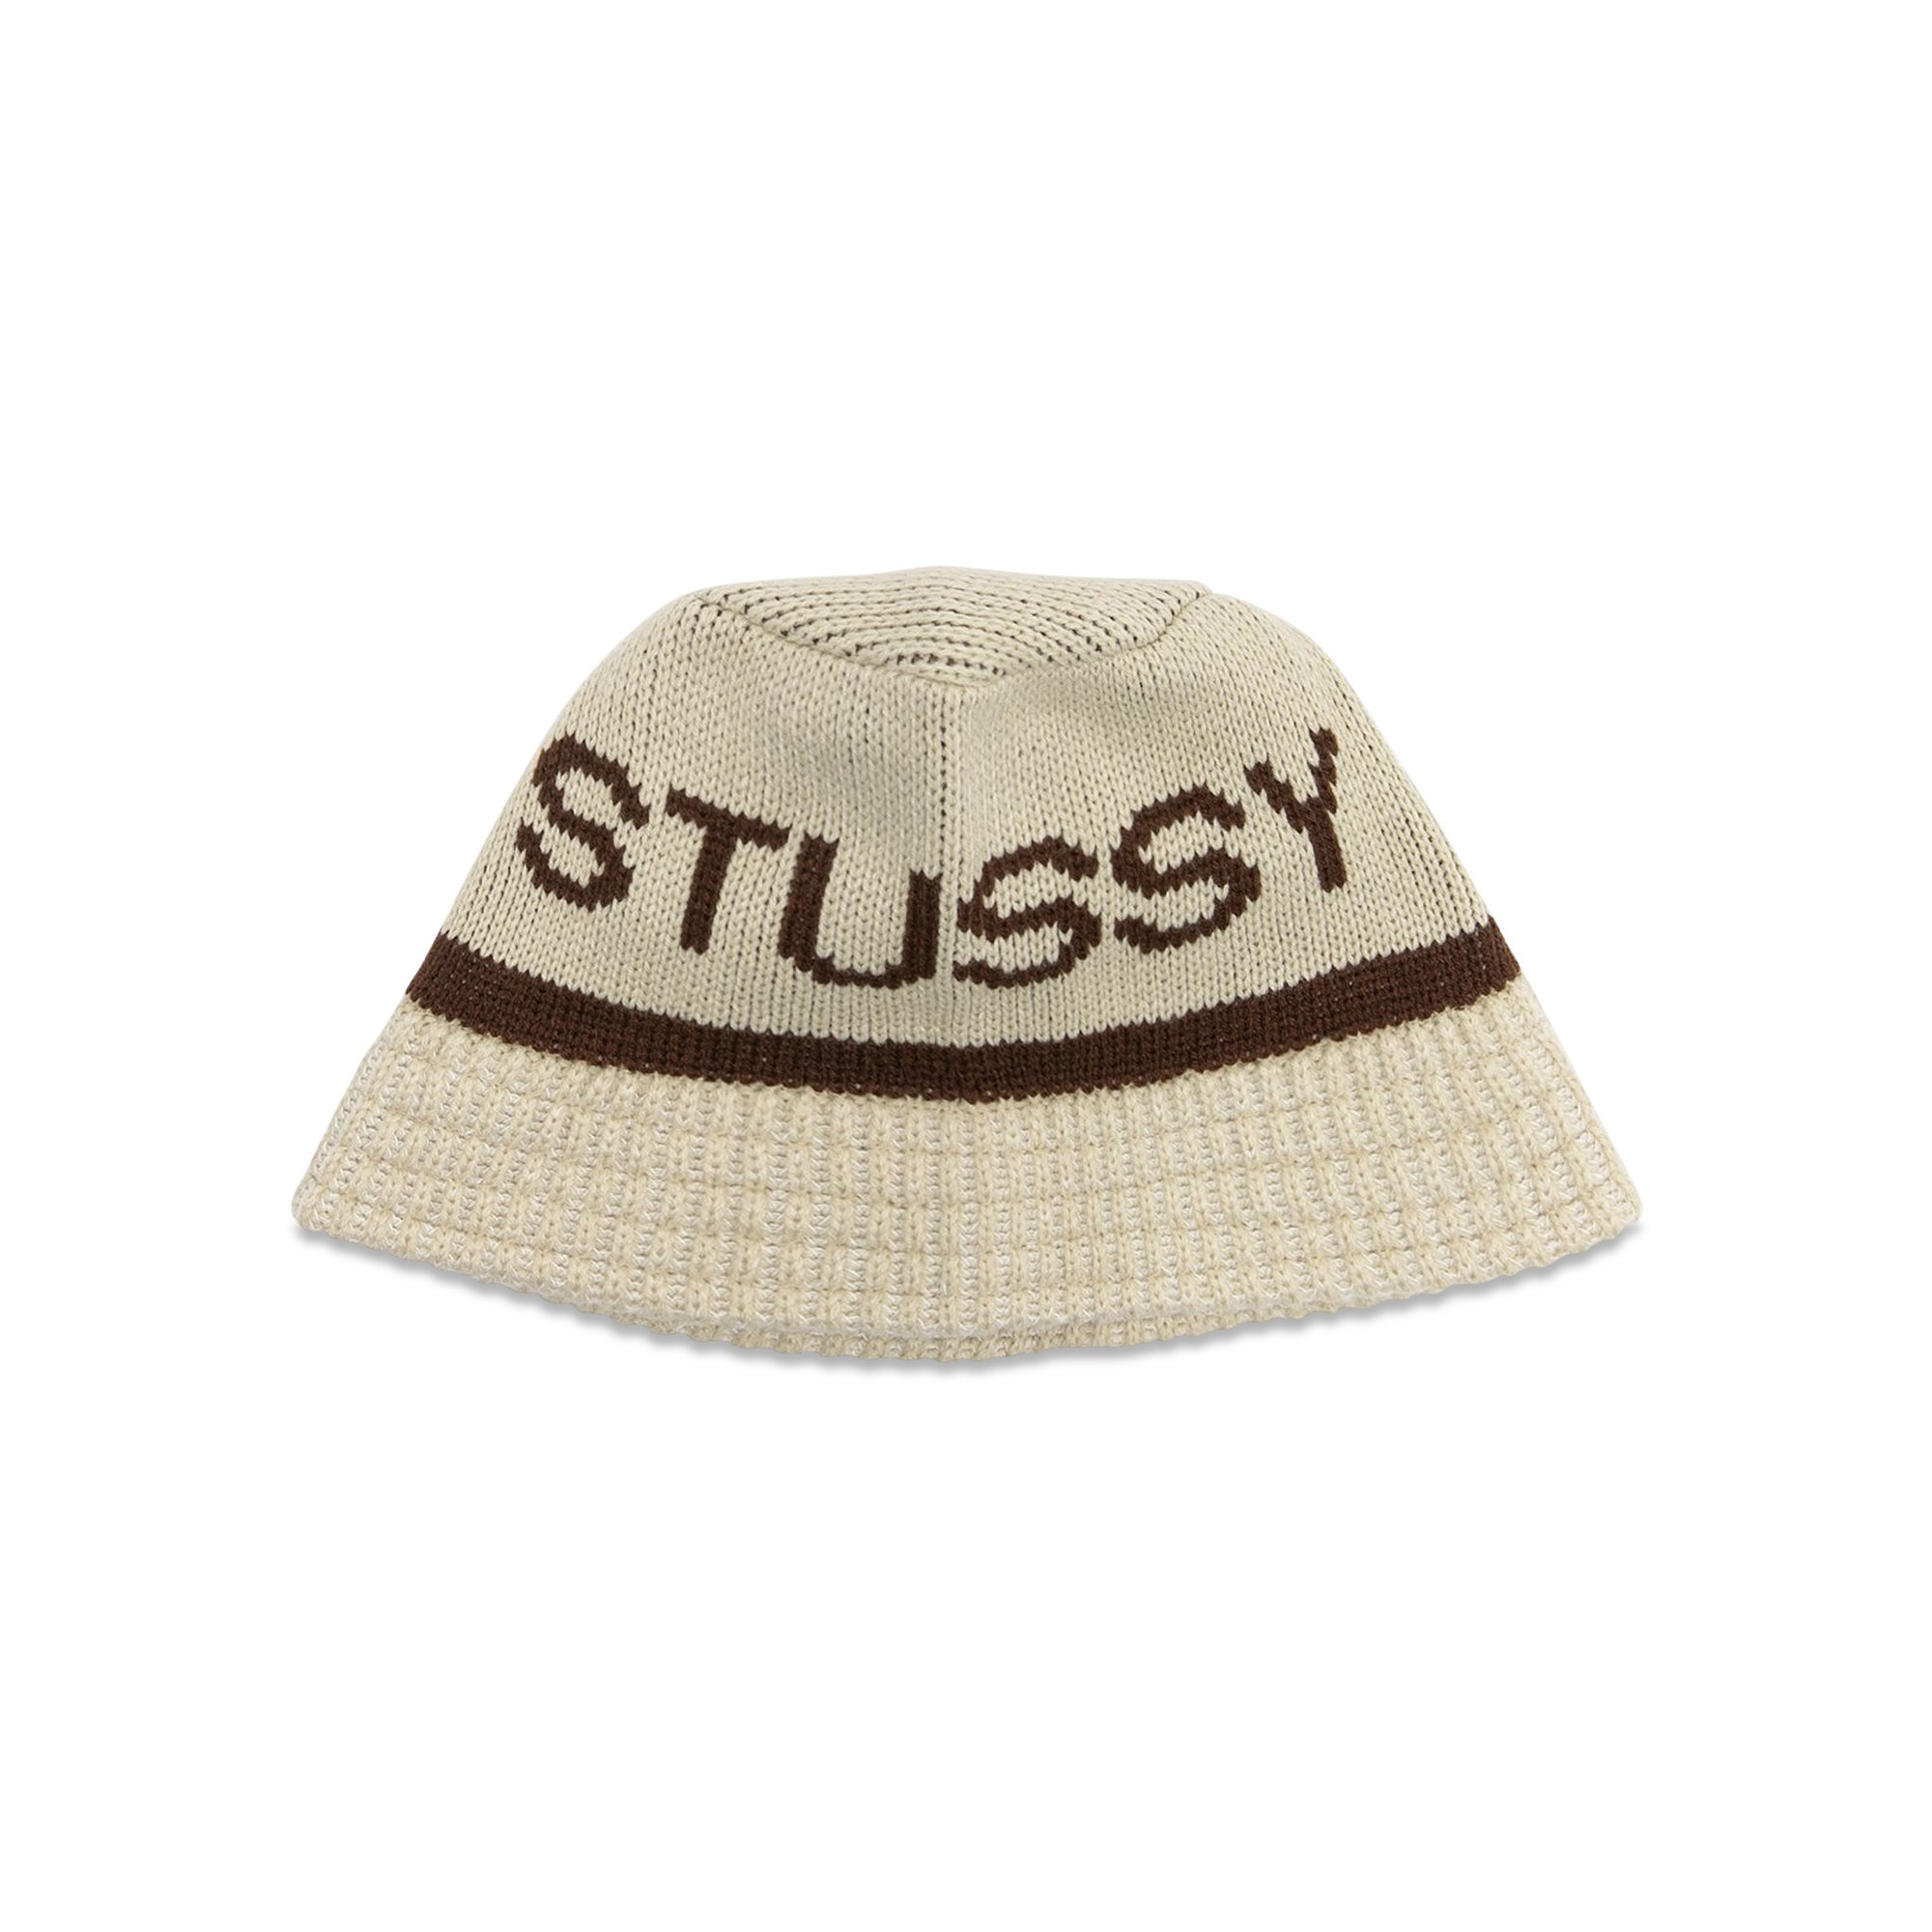 Buy Stussy Jacquard Knit Bucket Hat 'Natural' - 1321095 NATU | GOAT